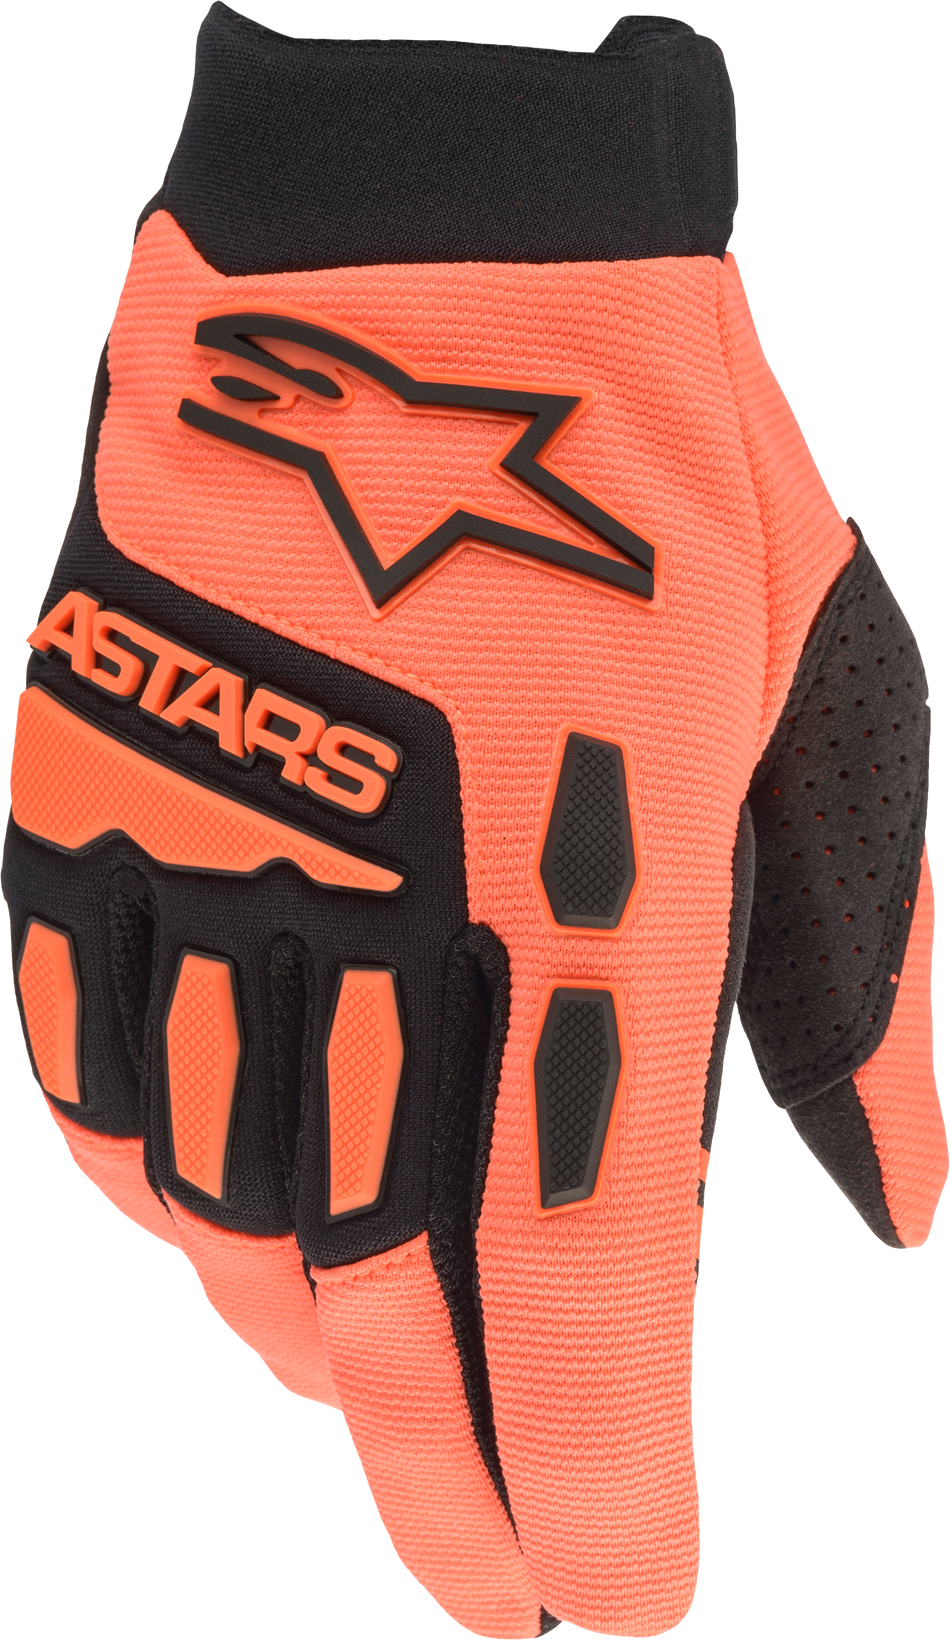 ALPINESTARS Full Bore Gloves Orange/Black Sm 3563622-41-S